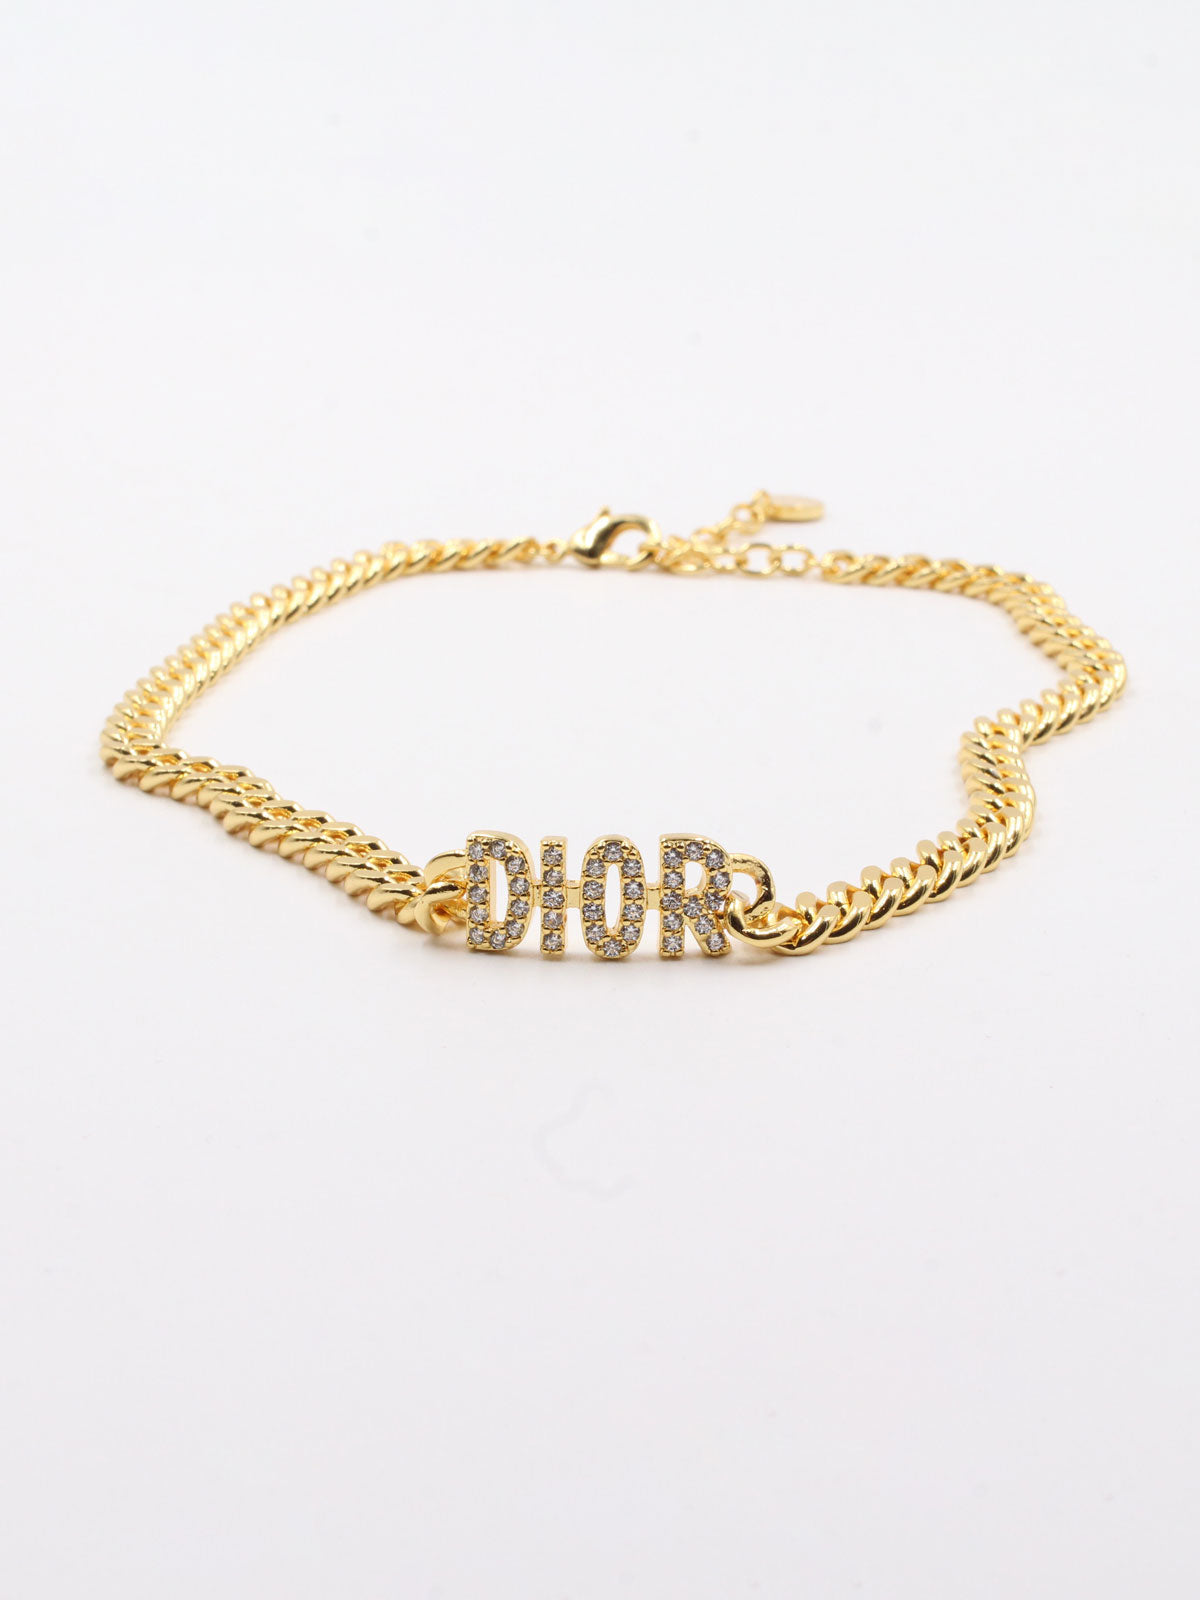 Dior zircon necklace - سلسال ديور زركون سلسال Jewel ذهبي 